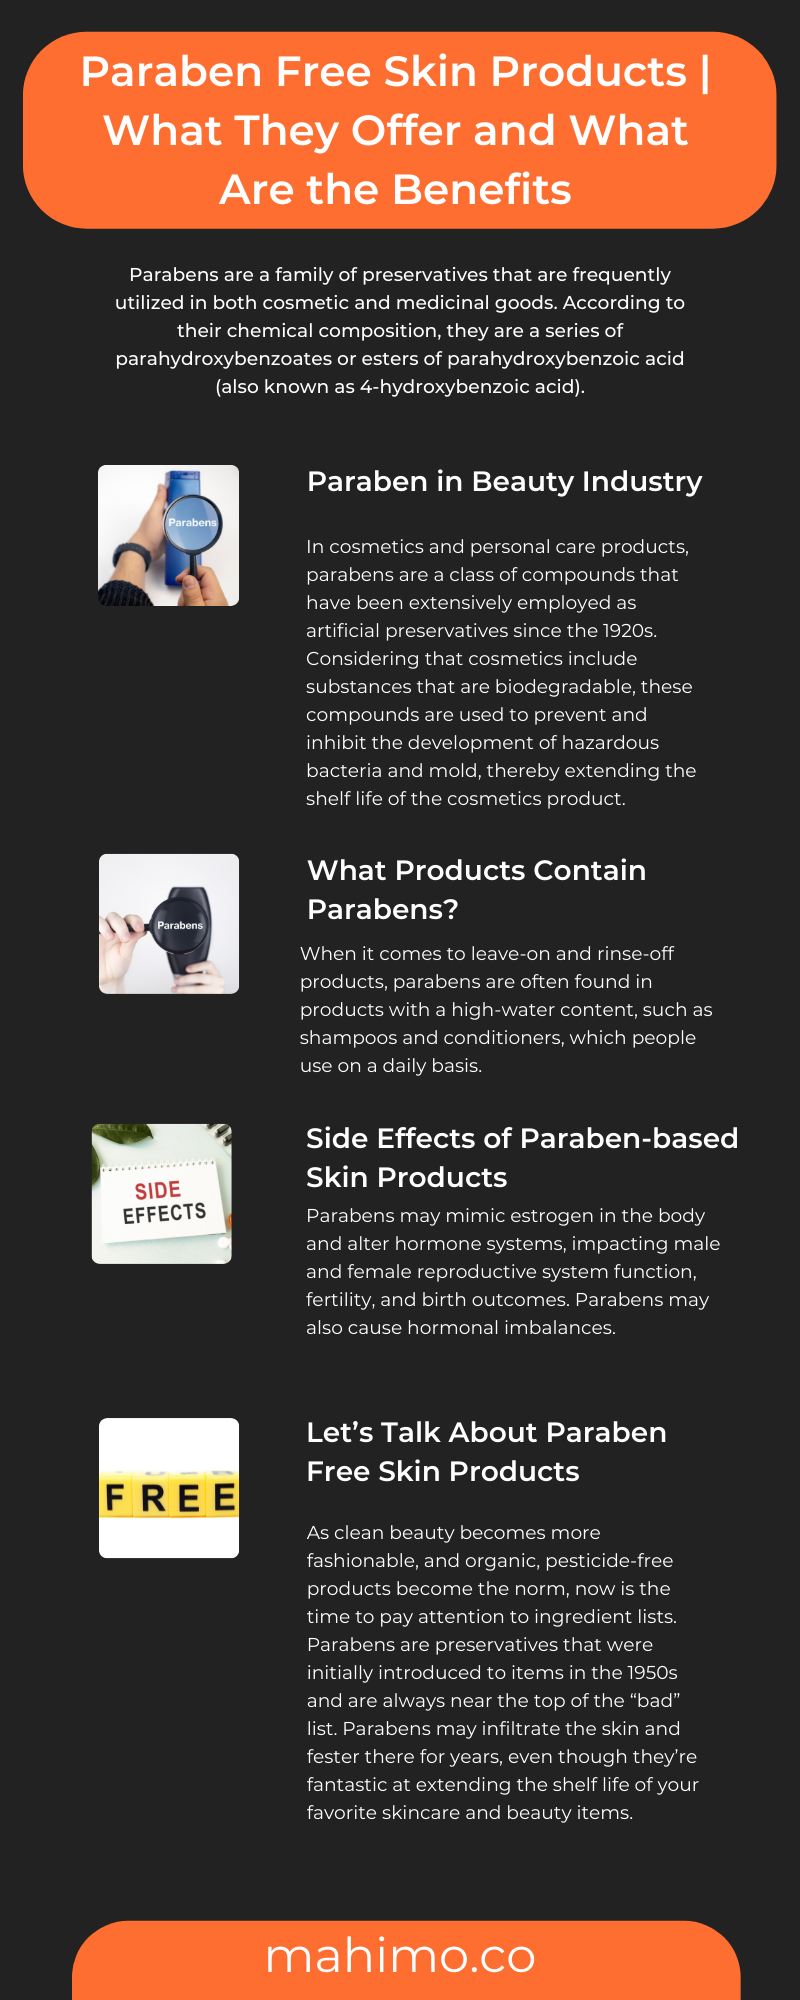 Paraben Free Skin Products